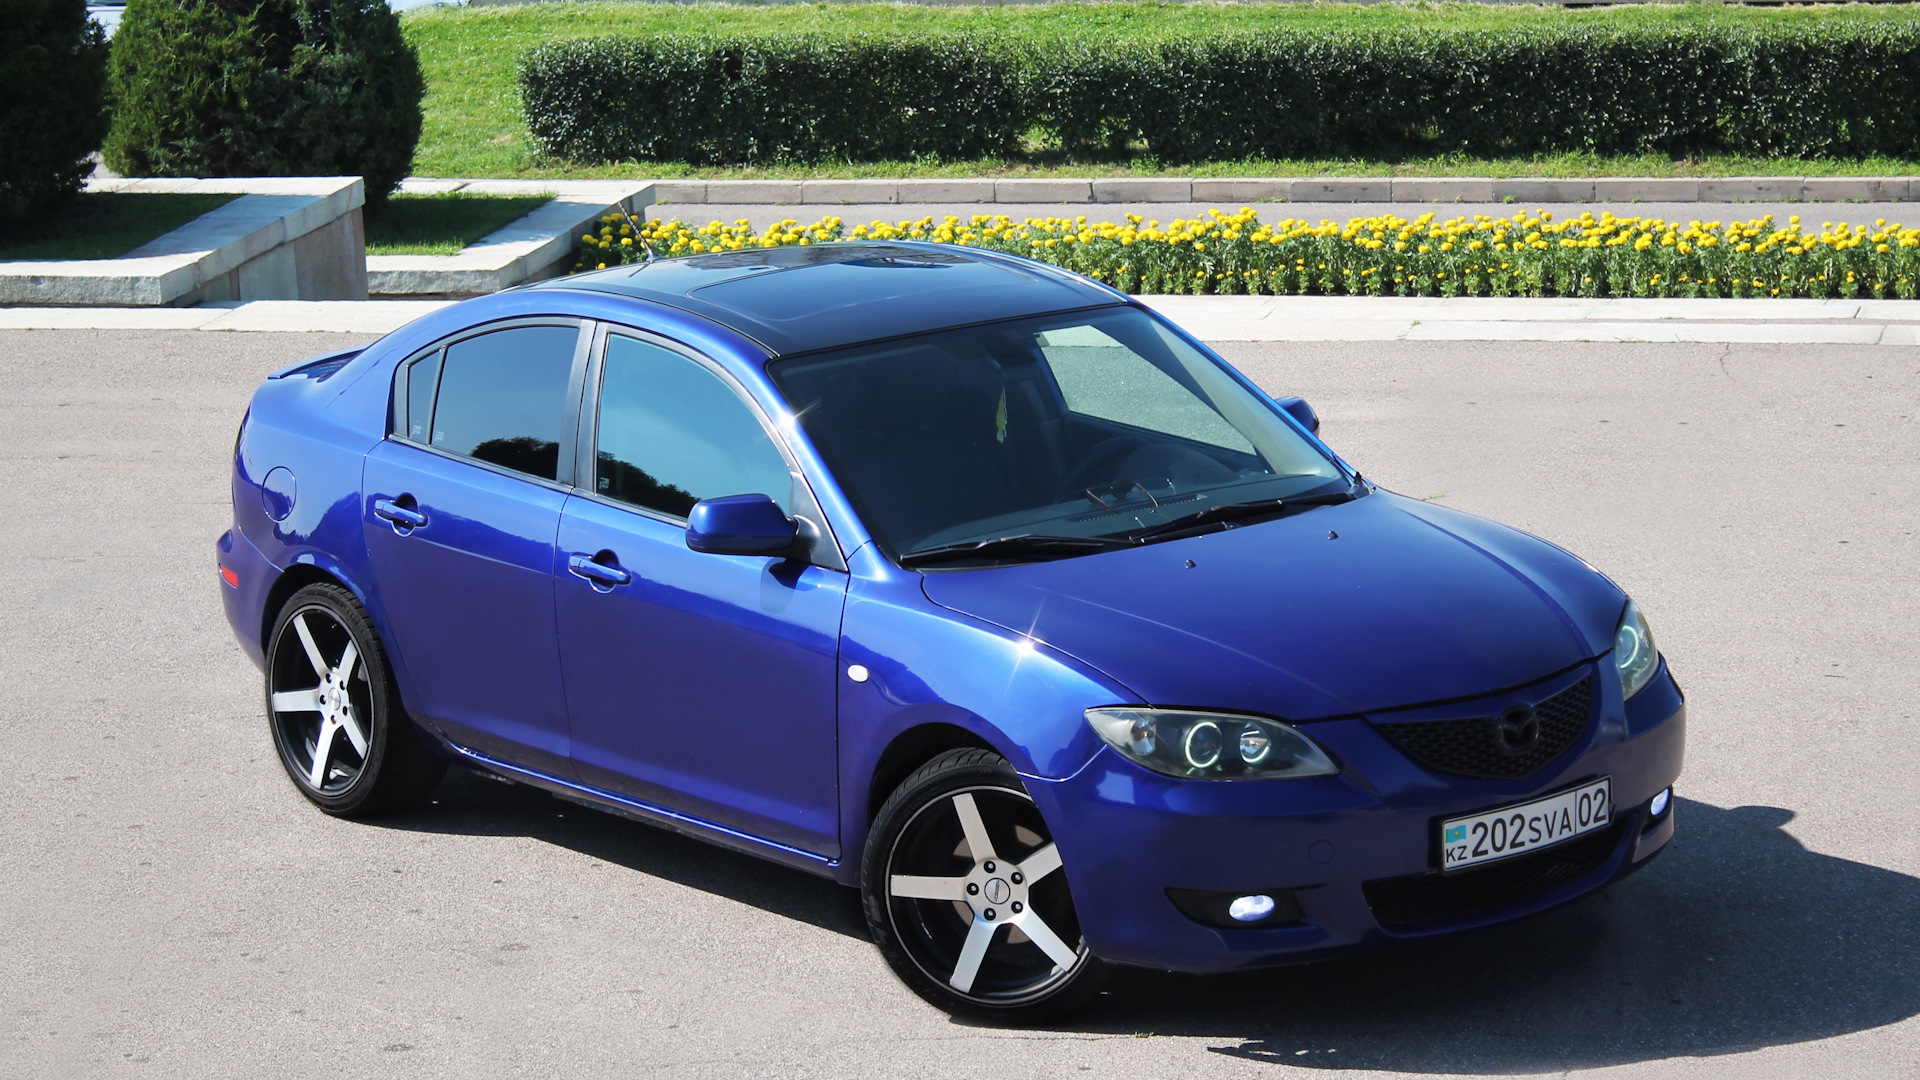 Mazda 3 drive2. Мазда 3 2008 седан синий. Мазда 3 2006 седан синяя. Mazda 3 Blue. Мазда 3 синяя седан.